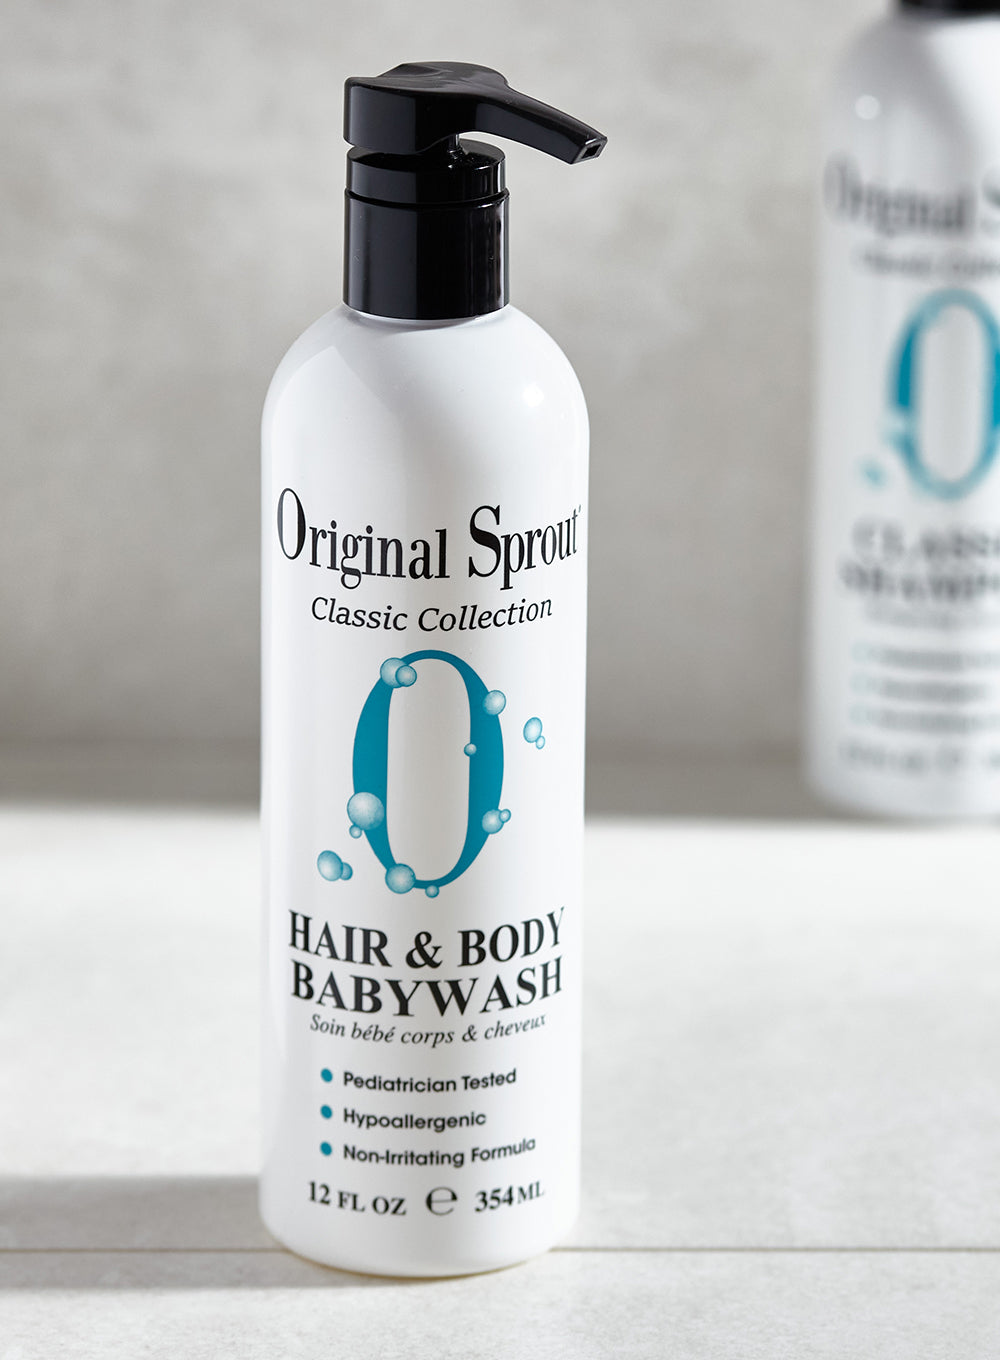 Original Sprout Hair & Body Babywash - 354ml